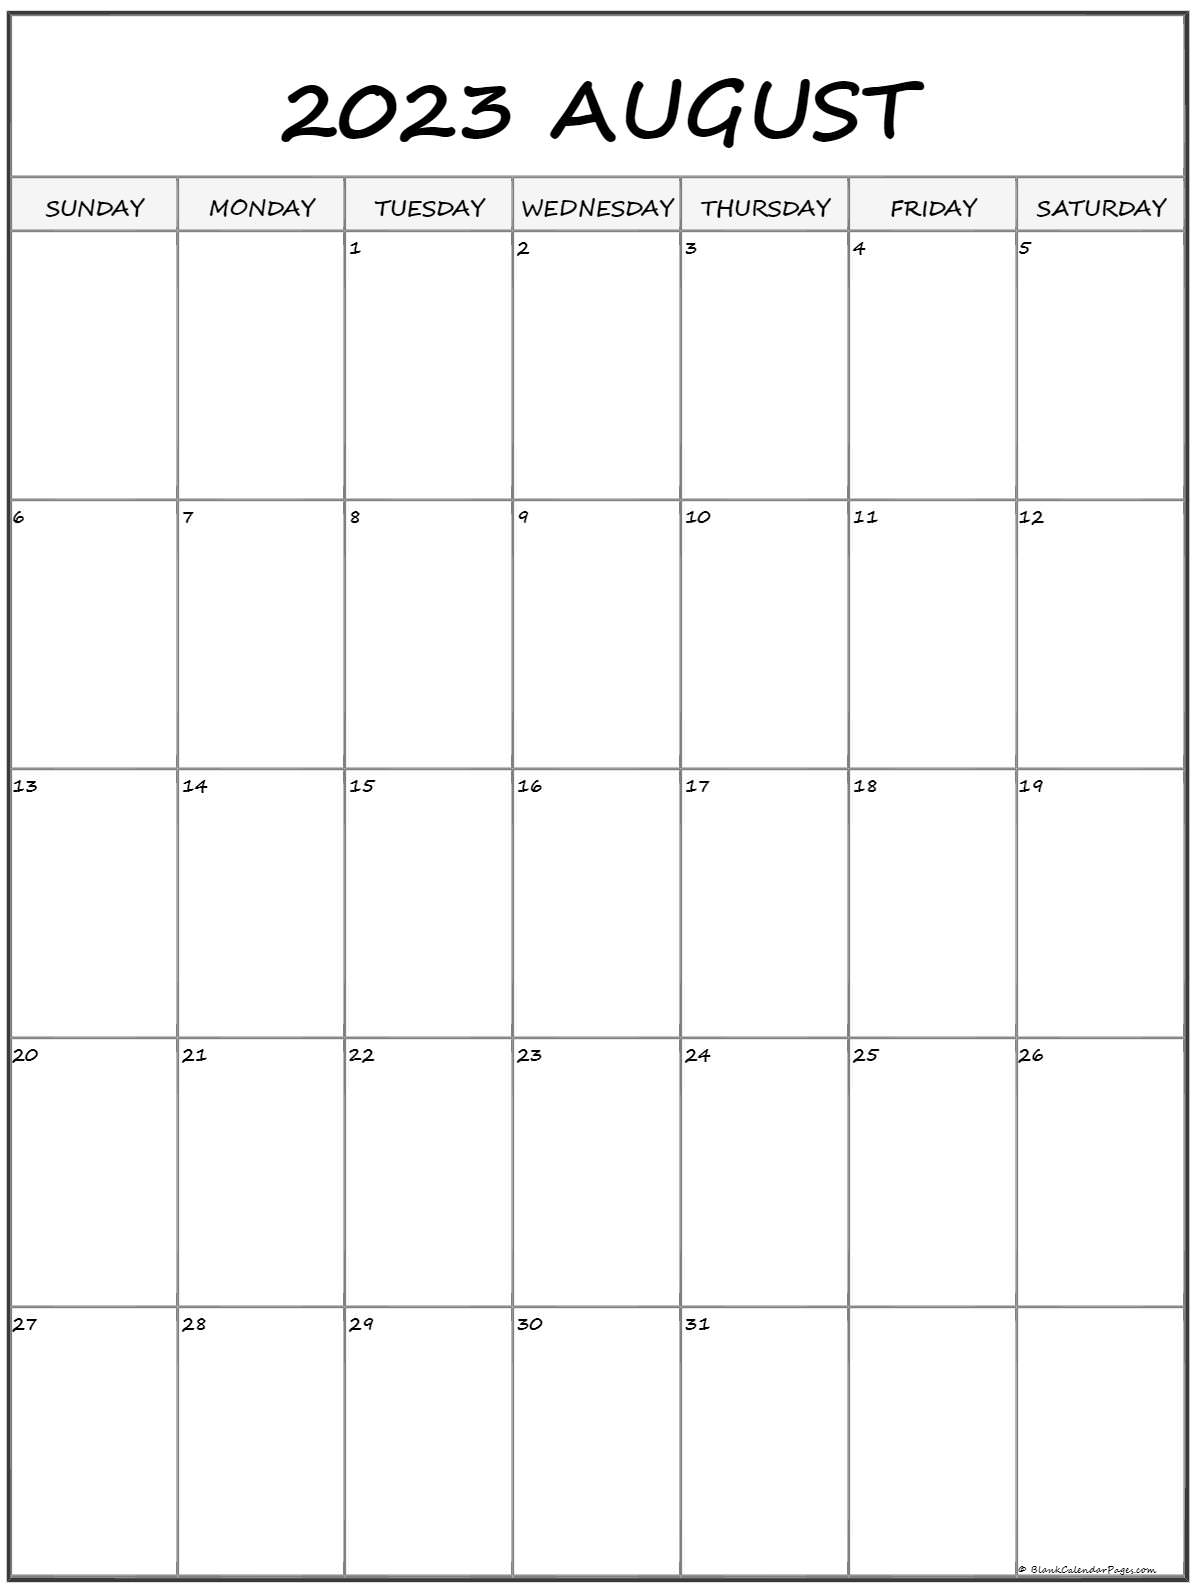 august-2023-vertical-calendar-portrait